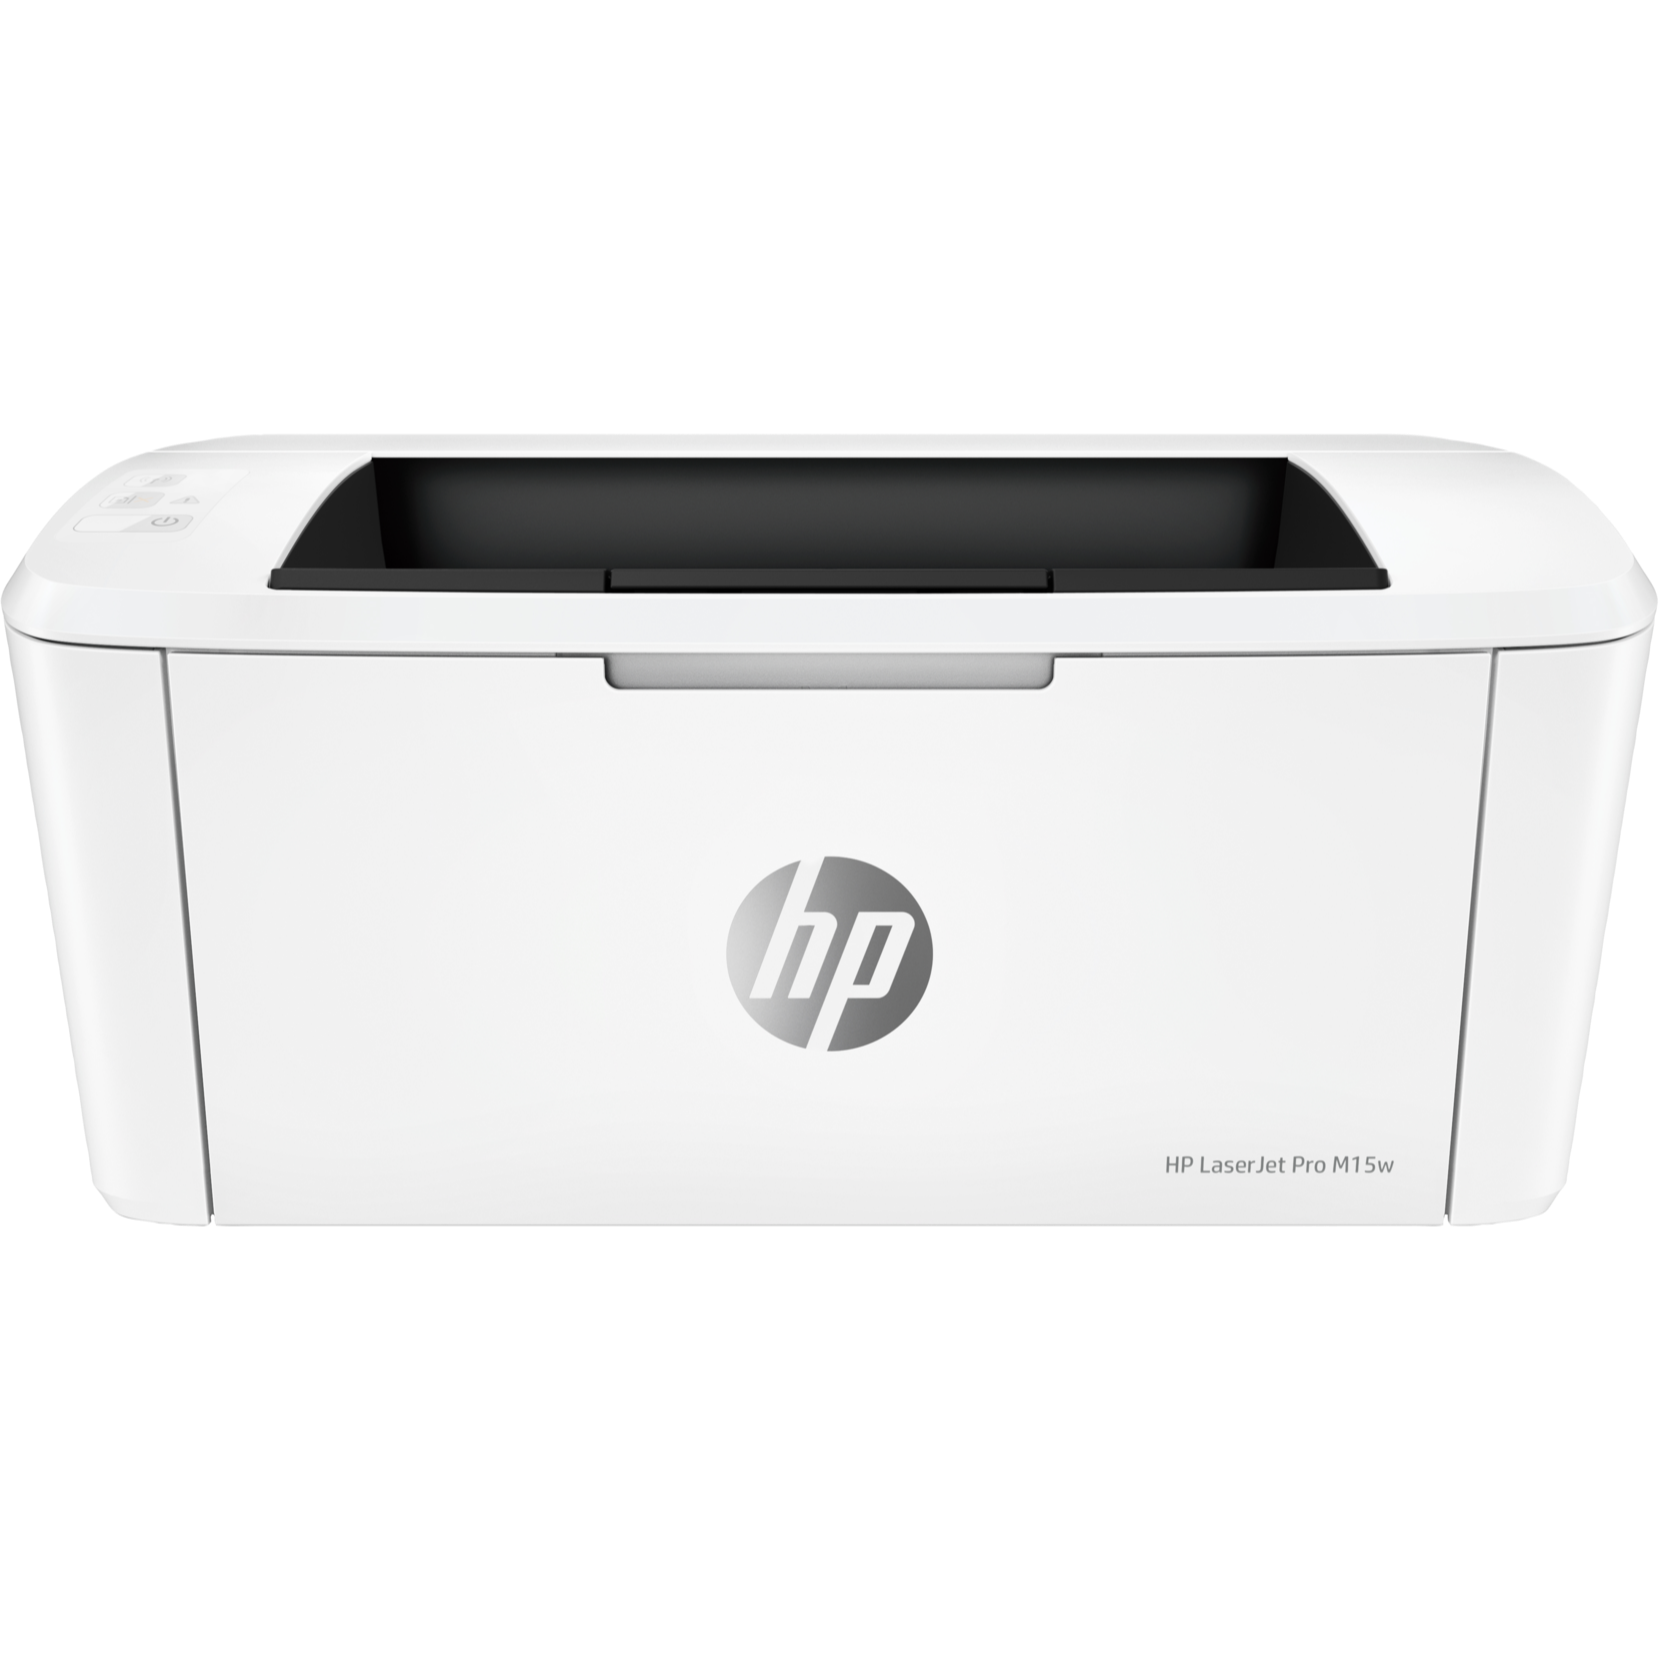 HP LaserJet Pro M15w Wireless Monochrome Printer Accessories